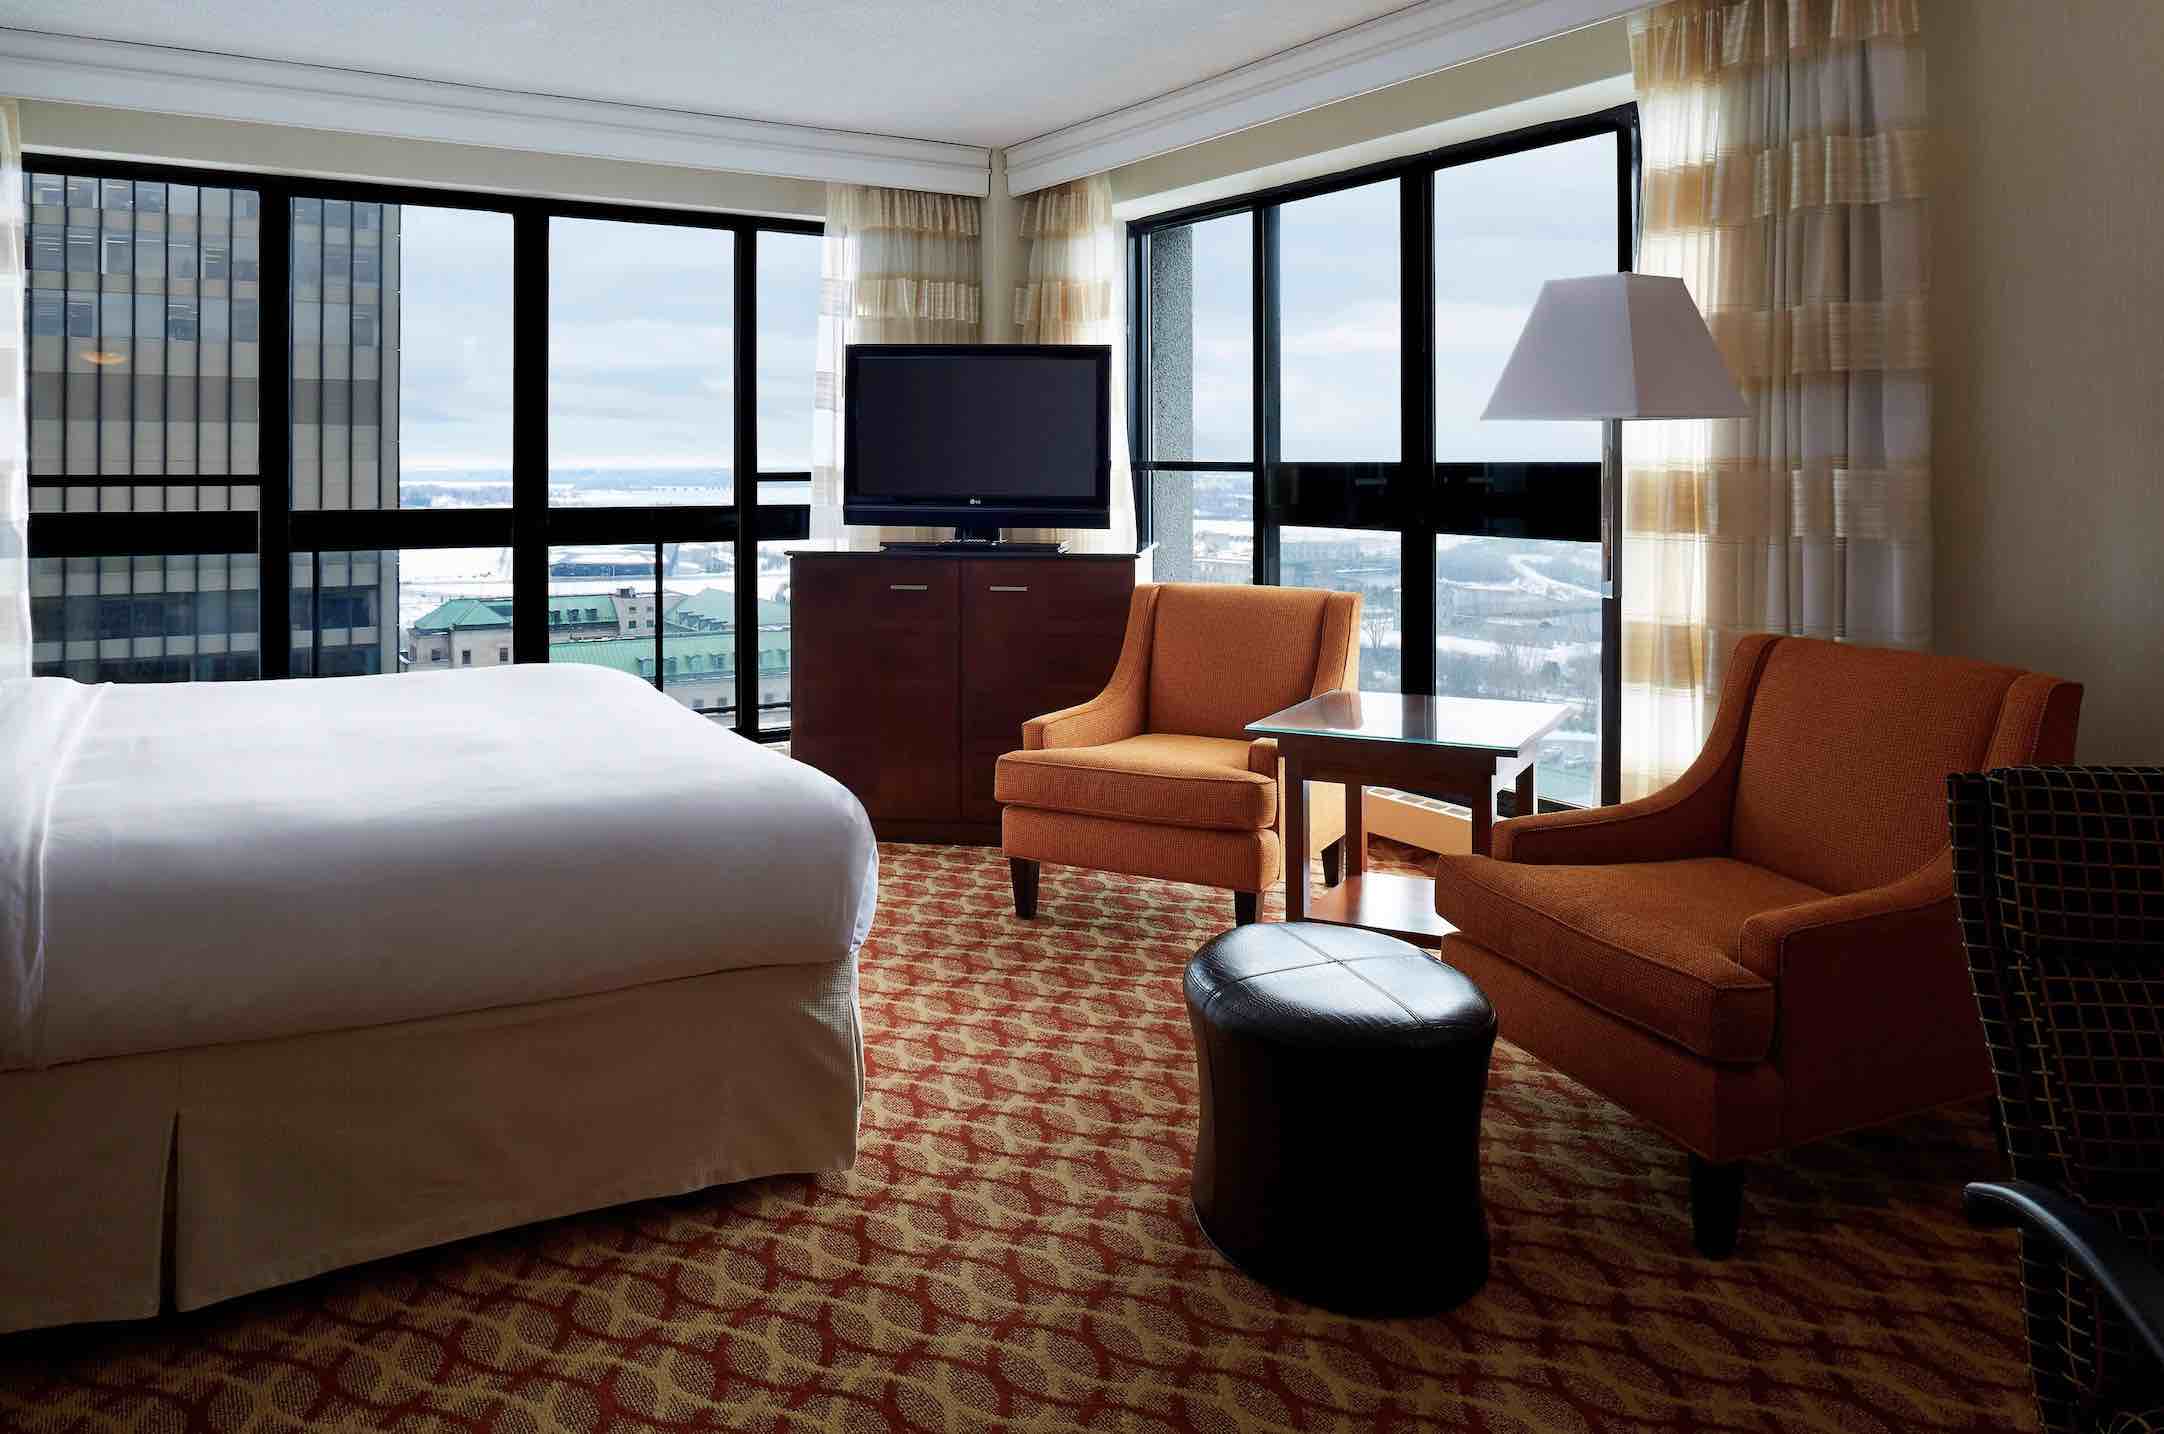 Ottawa Marriott Hotel luxury hotels in ottawa view over city from corner suite